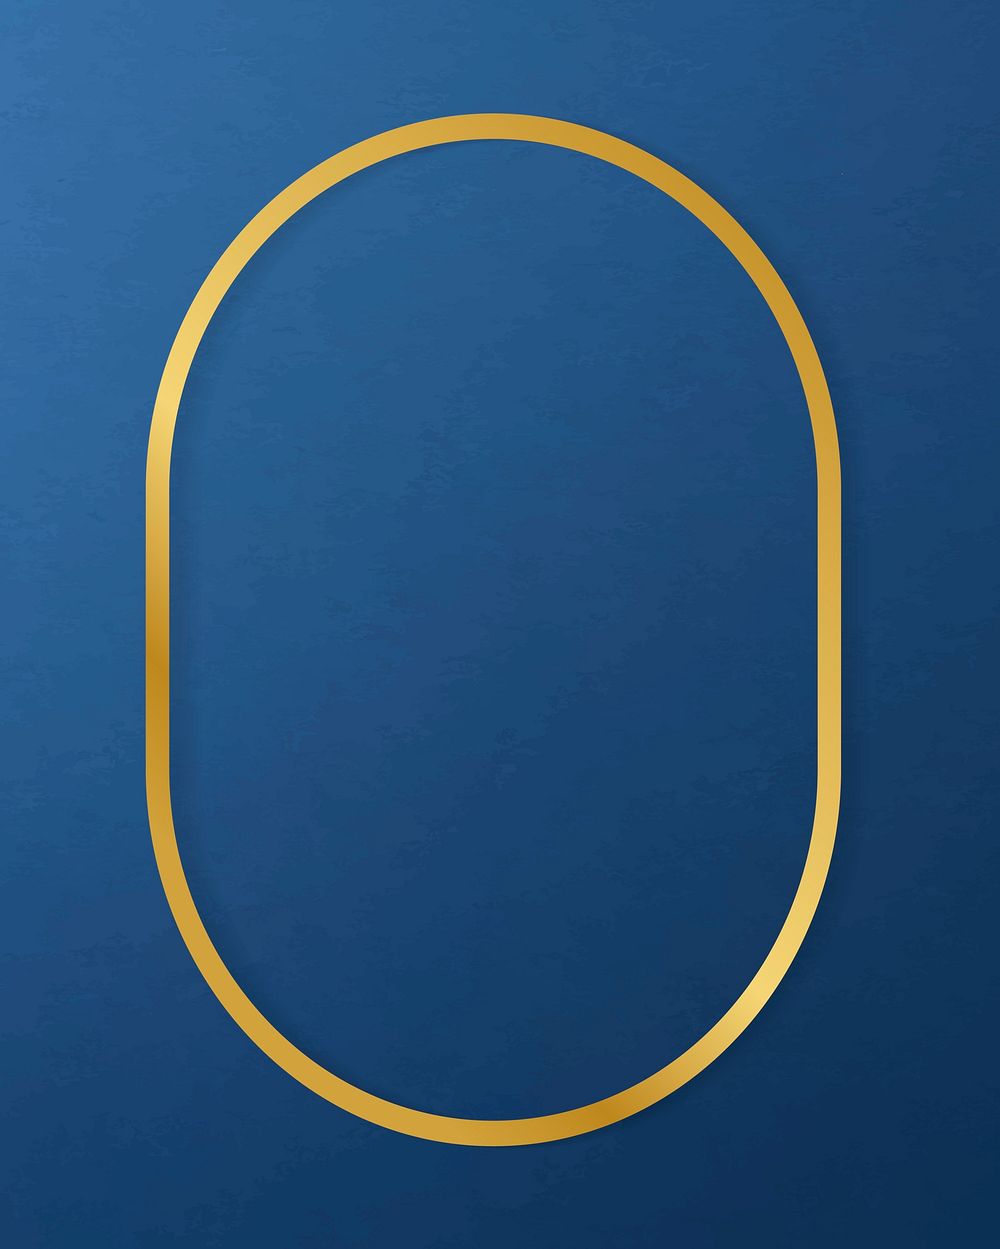 Gold oval frame on a plain blue background vector